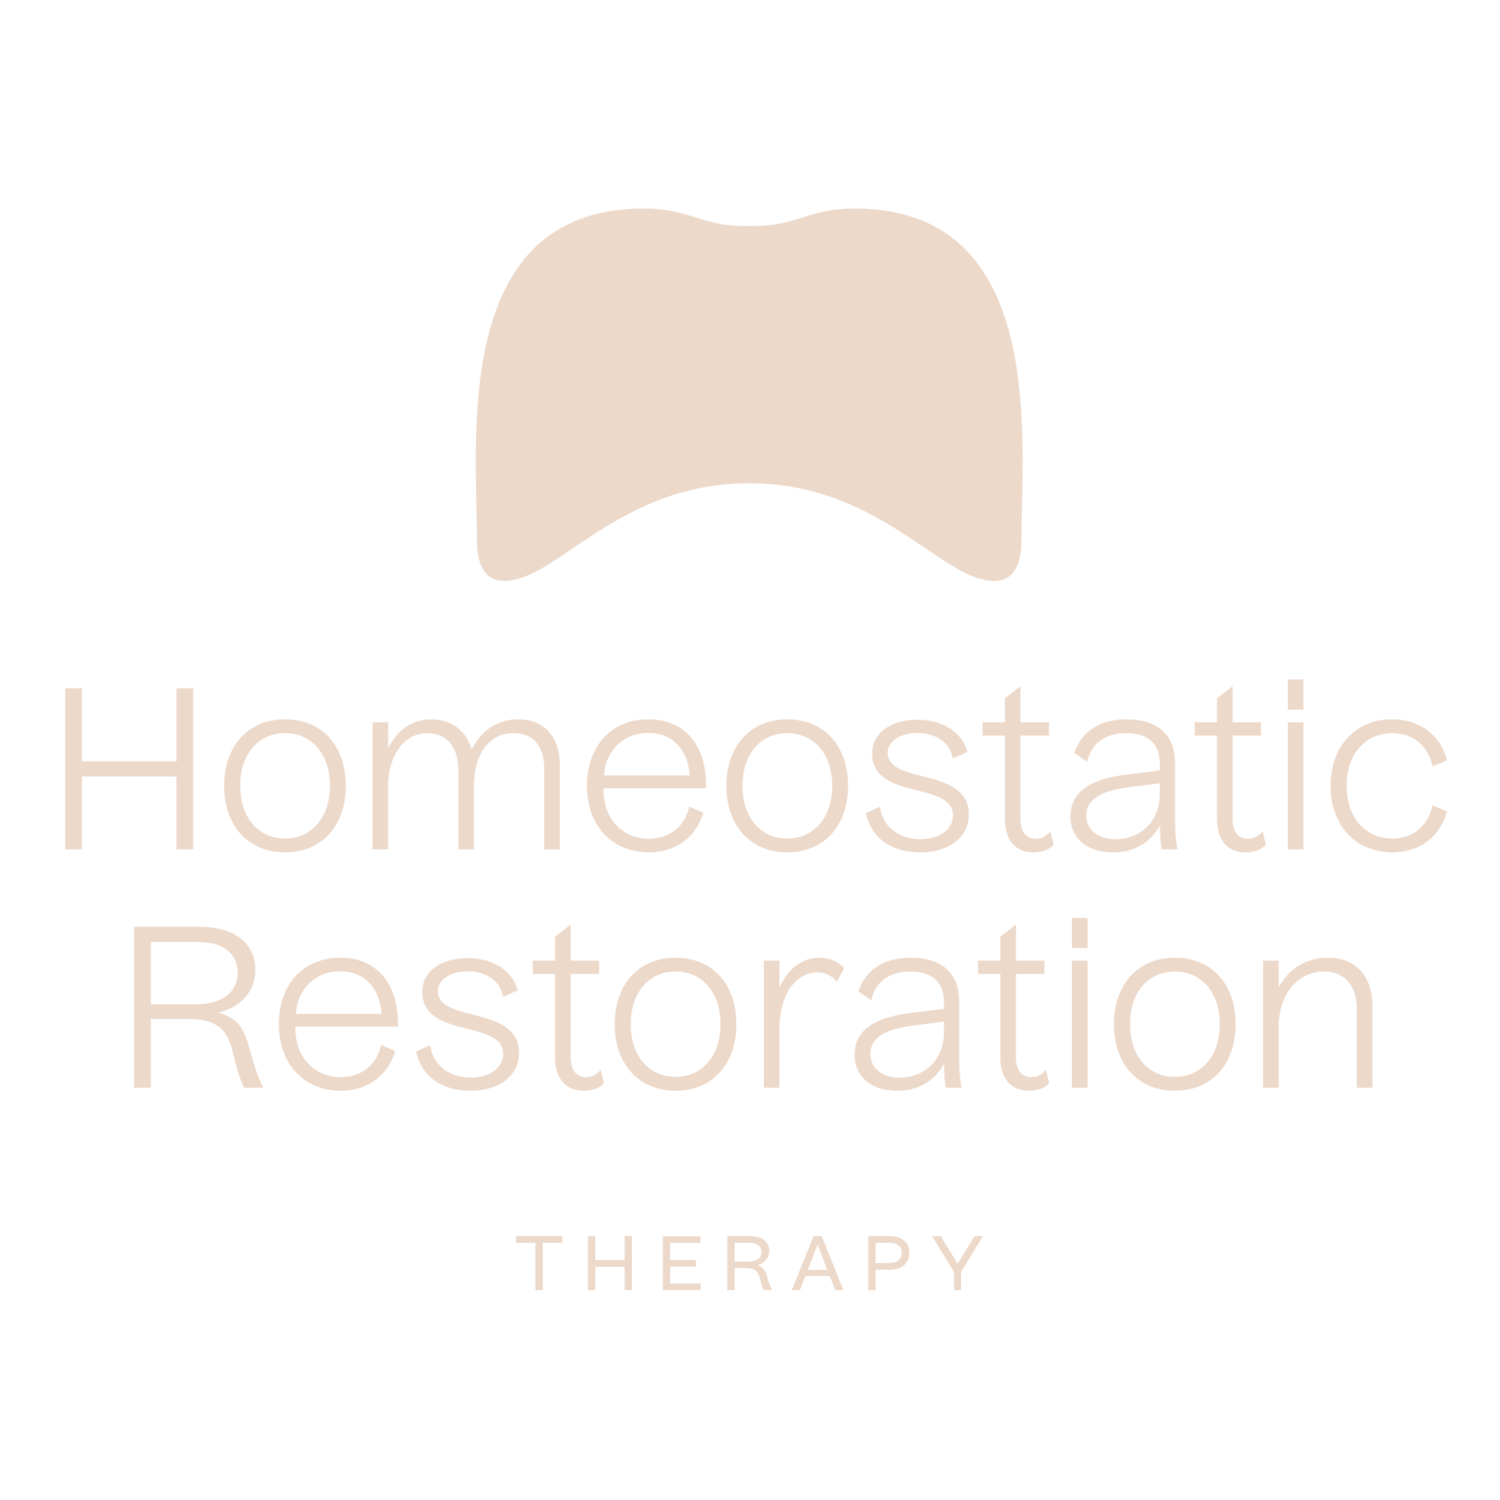 Homeostatic Restoration Therapy